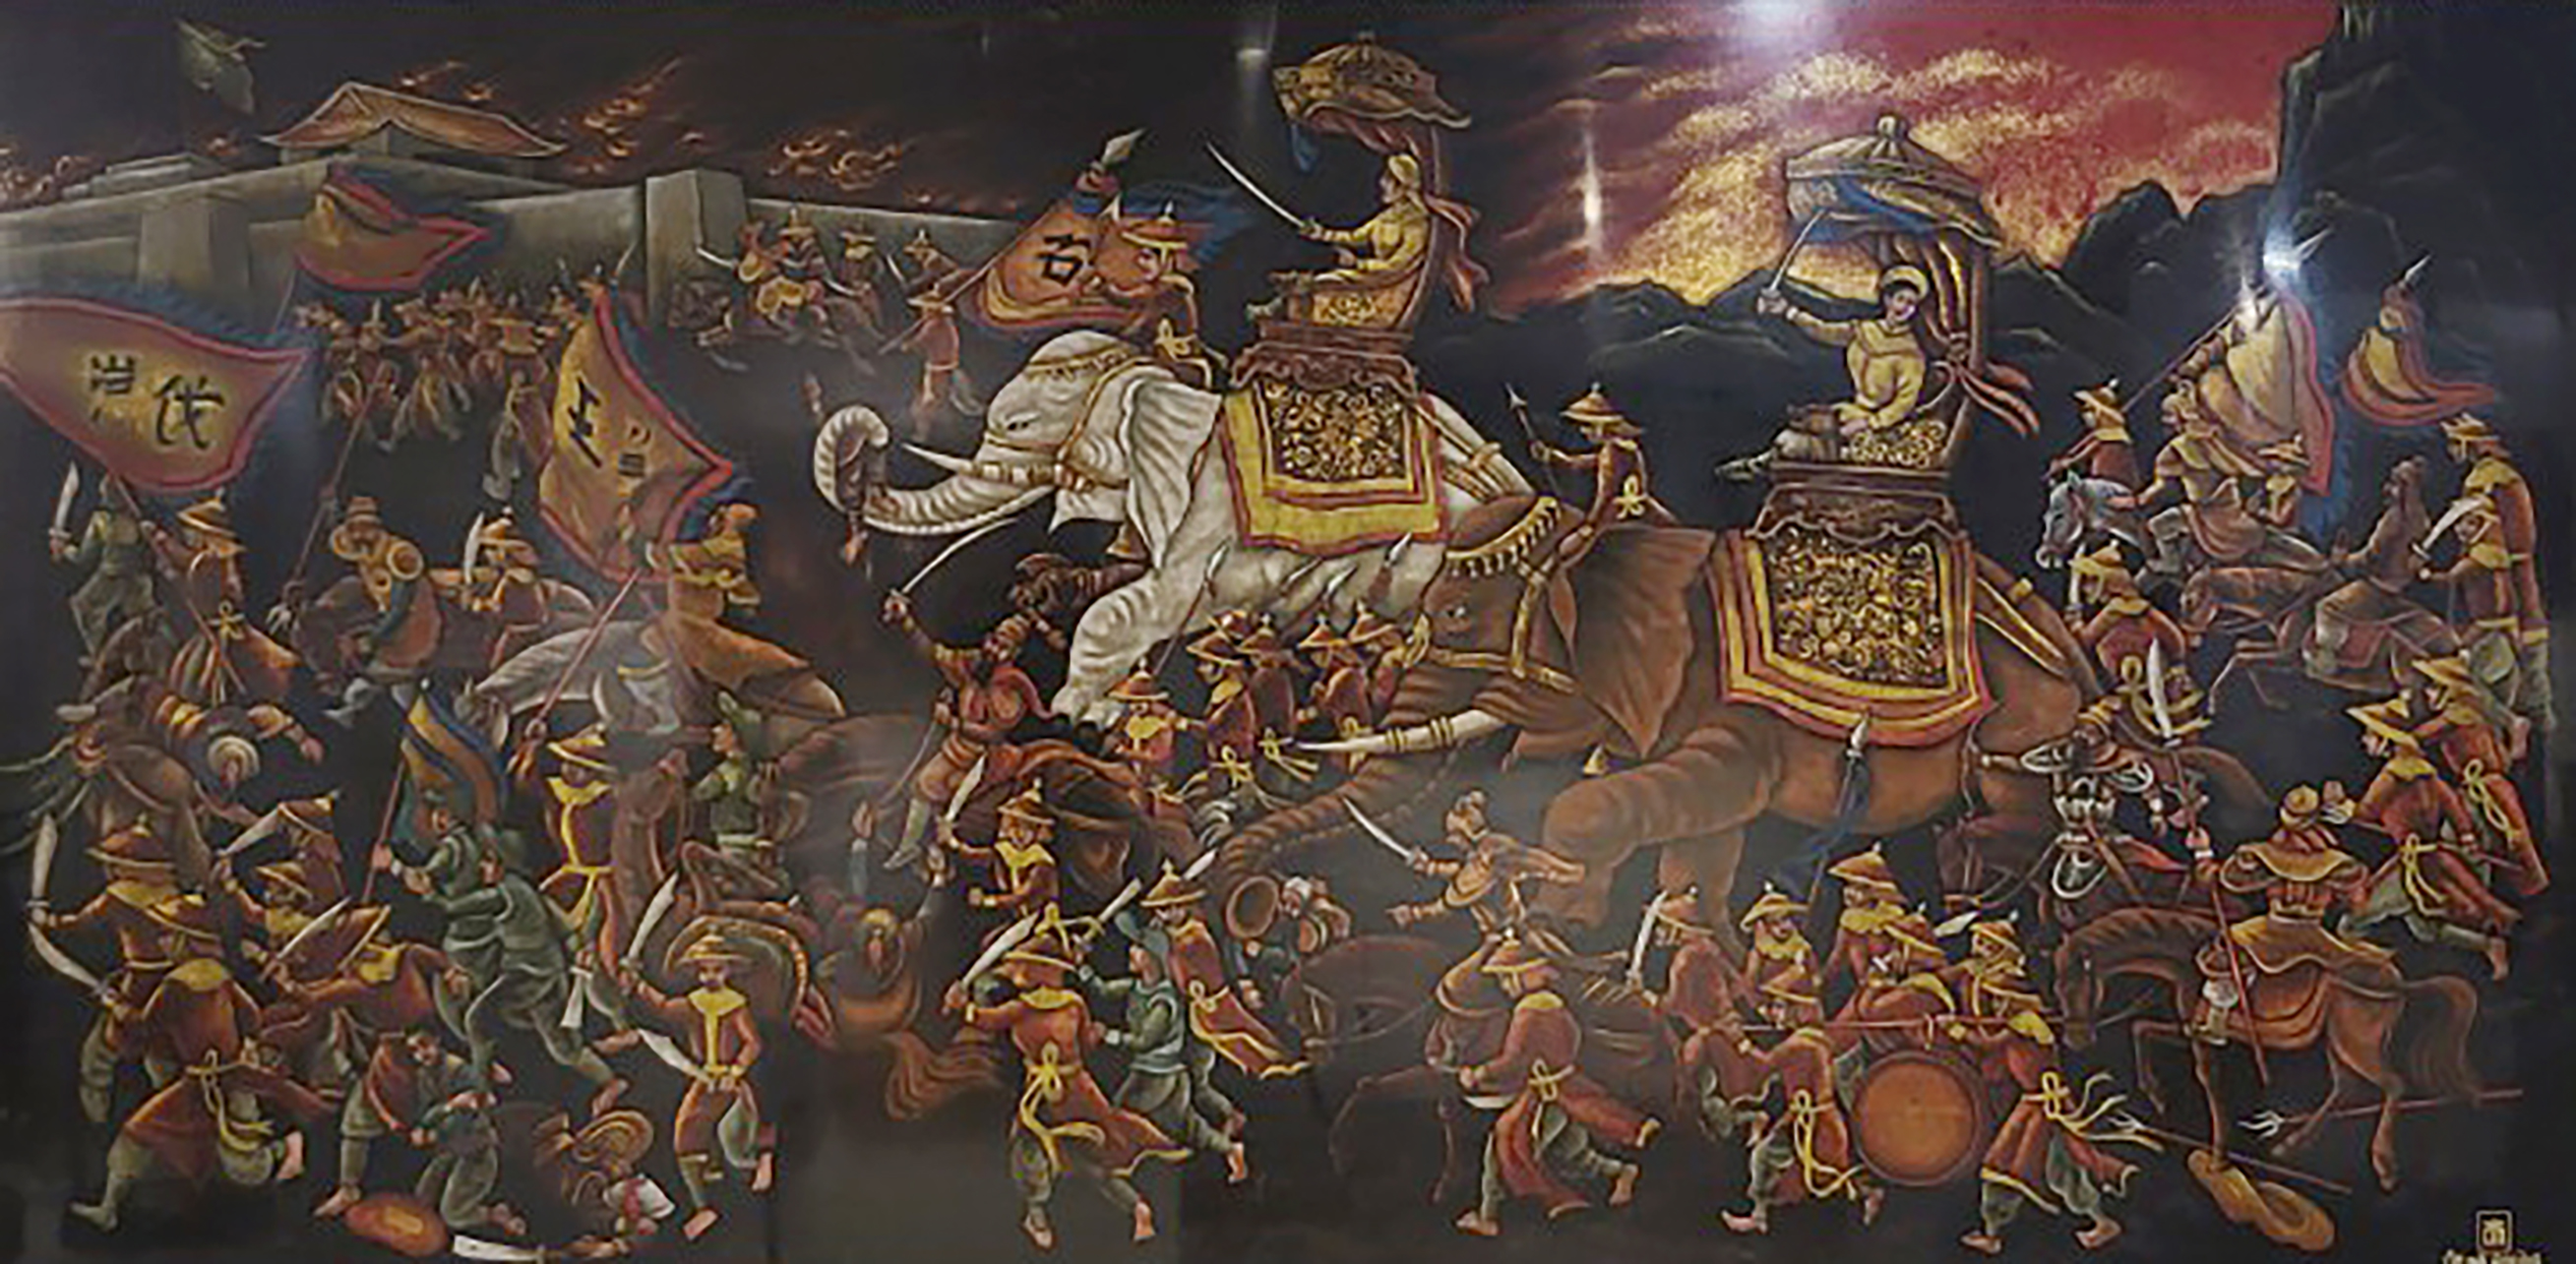 The 'Hai Ba Trung' work by painter Nam Tinh